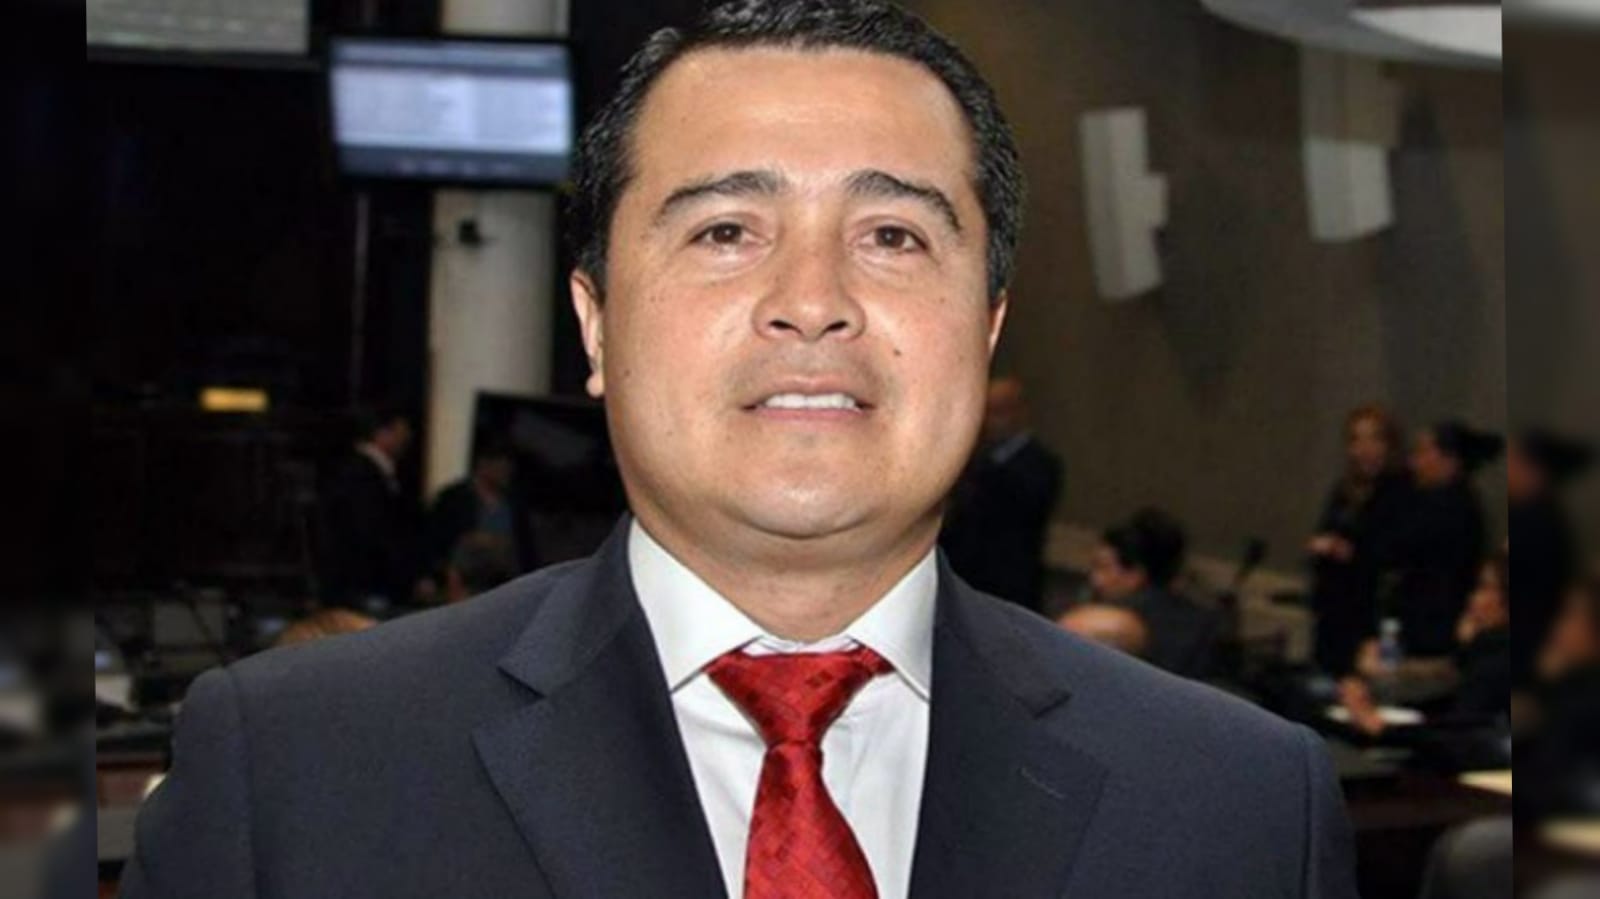 Juan Antonio Hernández